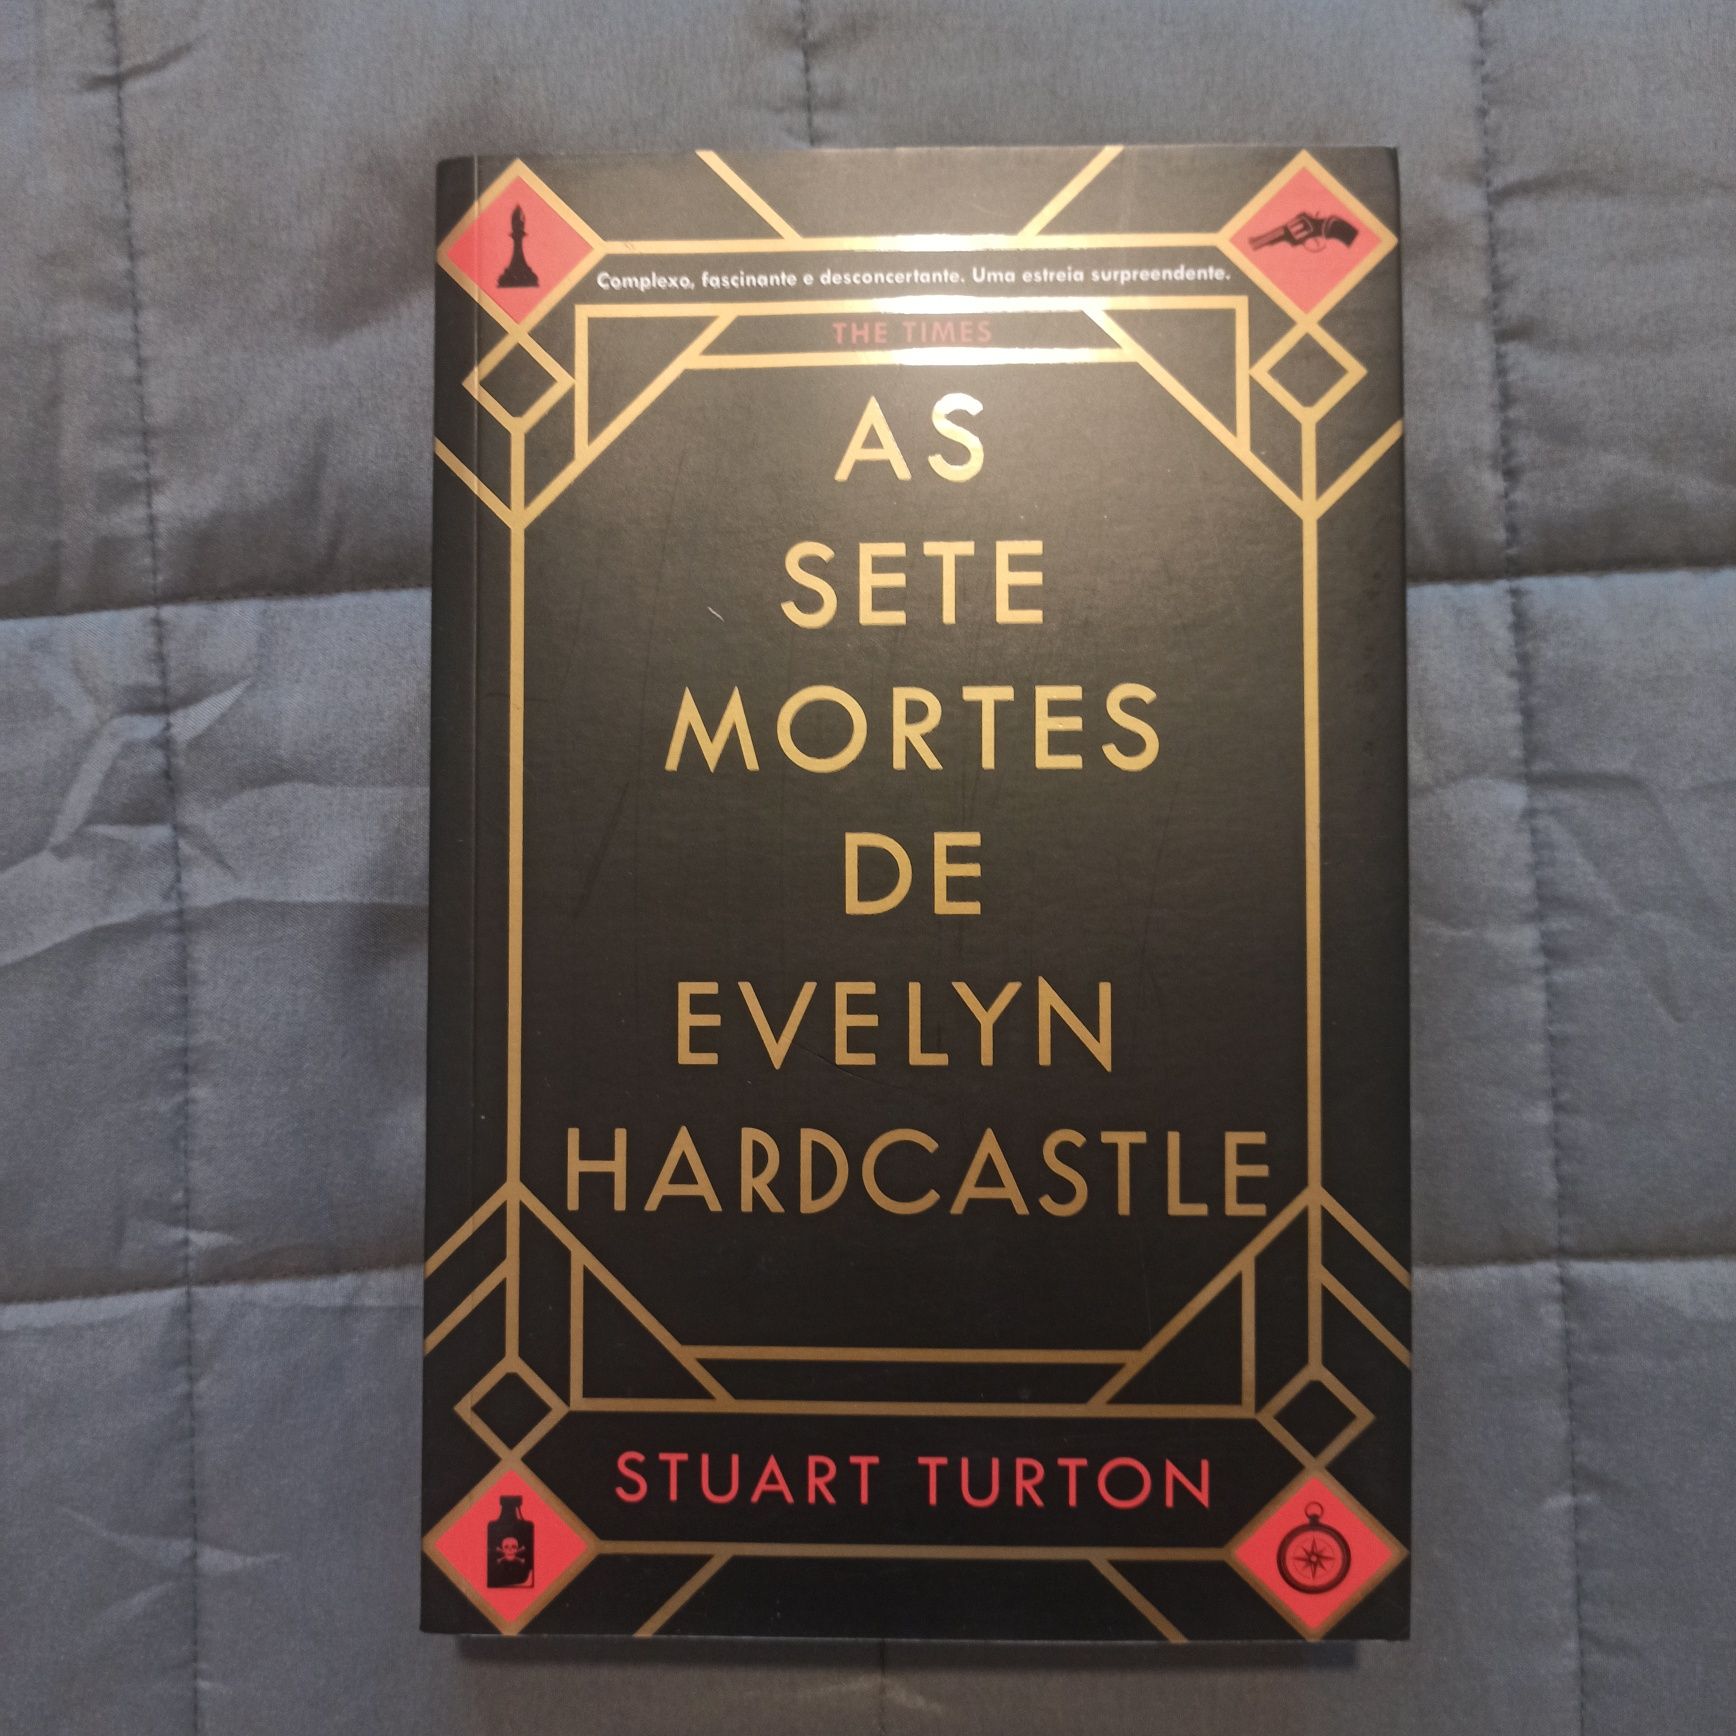 Livro "As sete mortes de Evelyn Hardcastle" de Stuart Turton